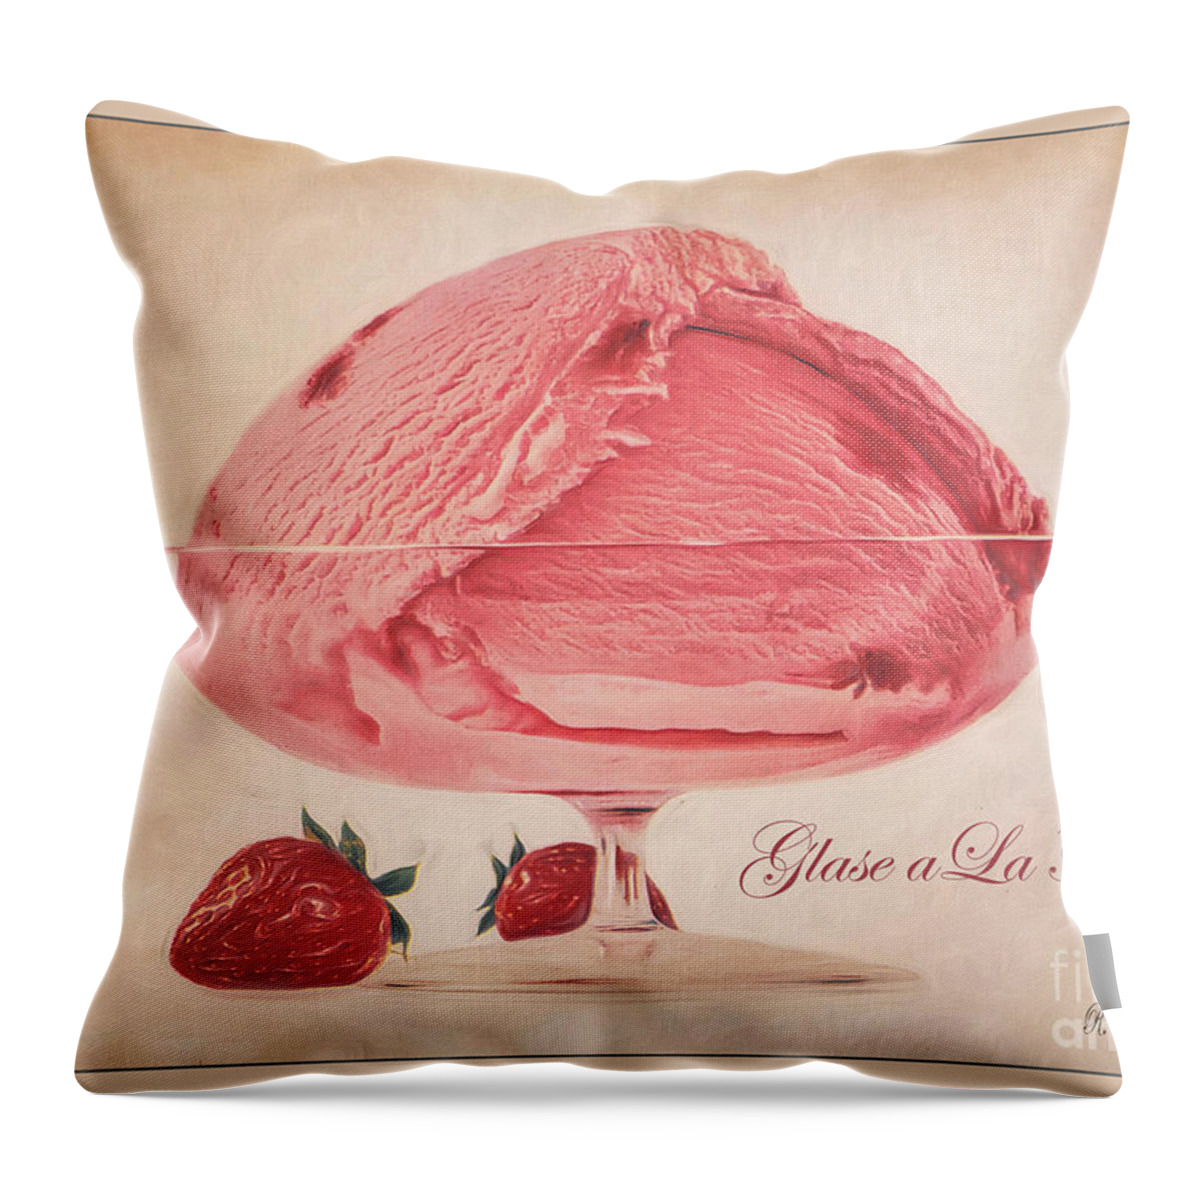 Strawberry Ice Cream Throw Pillow featuring the digital art Strawberry Ice Cream by Rebecca Langen